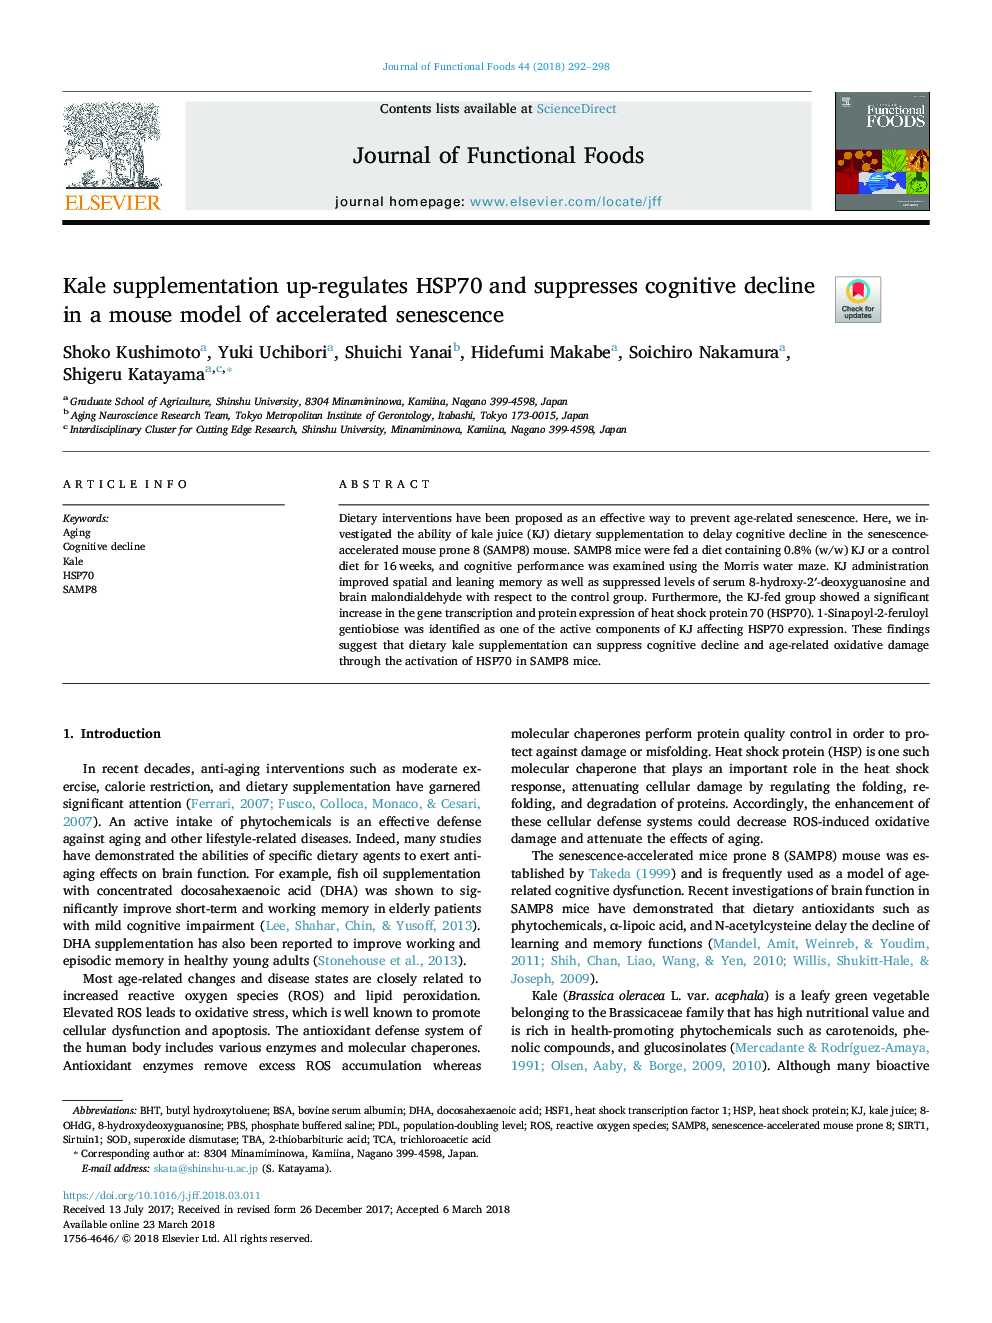 Kale supplementation up-regulates HSP70 and suppresses cognitive decline in a mouse model of accelerated senescence